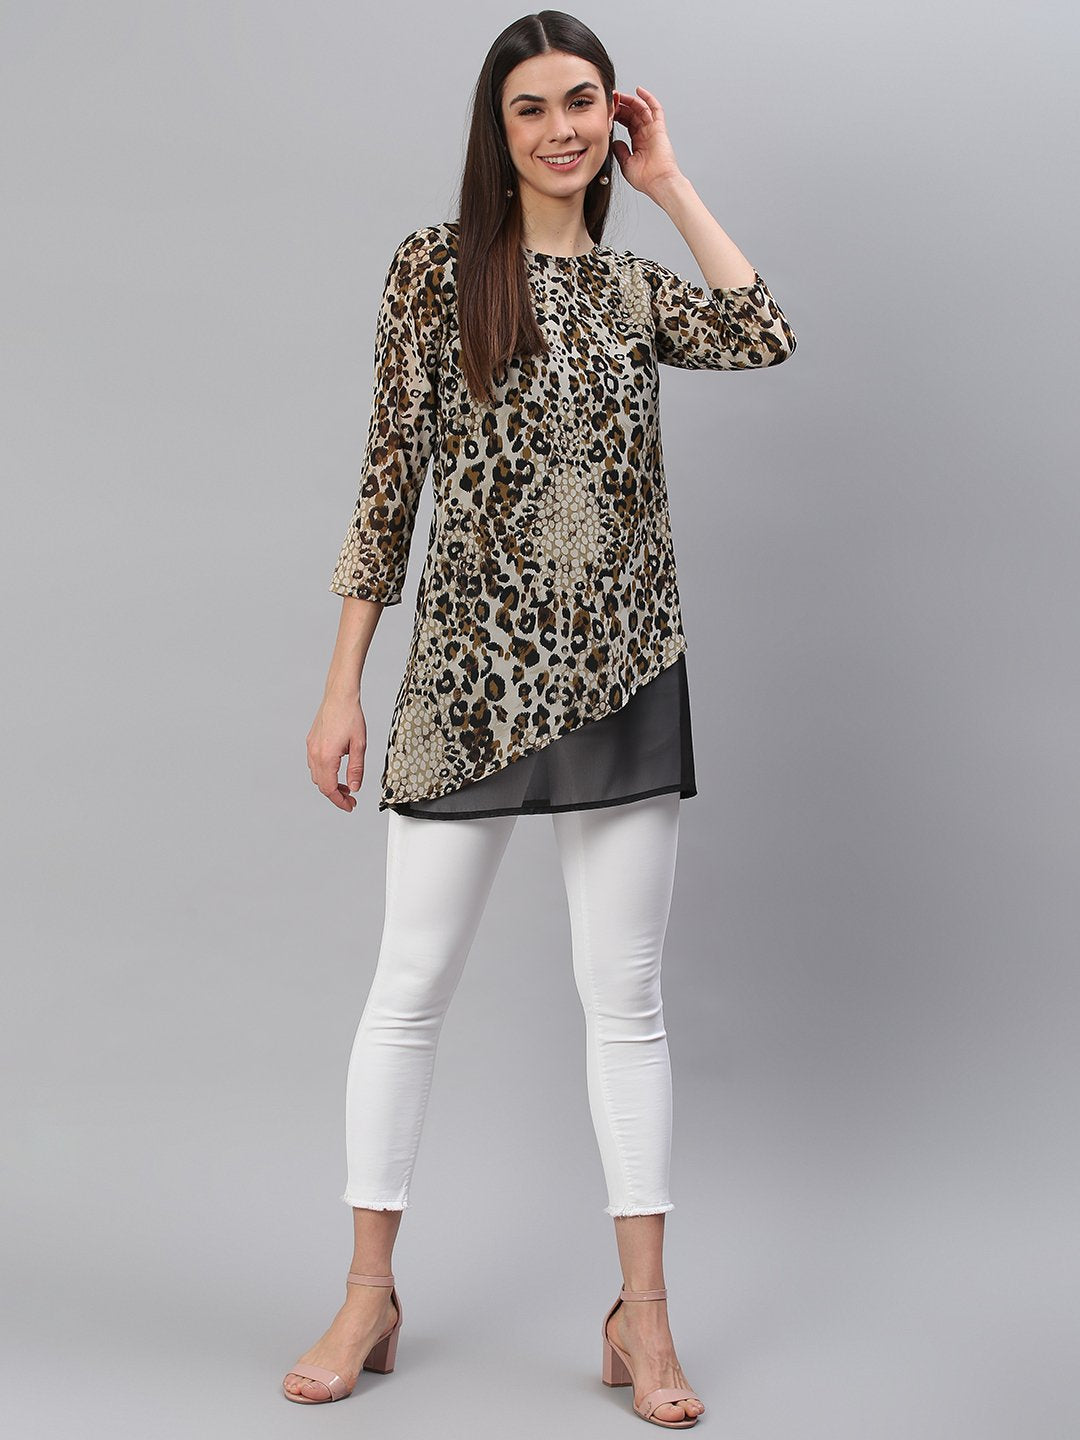 Designer Brown Cheetah Print Tunic